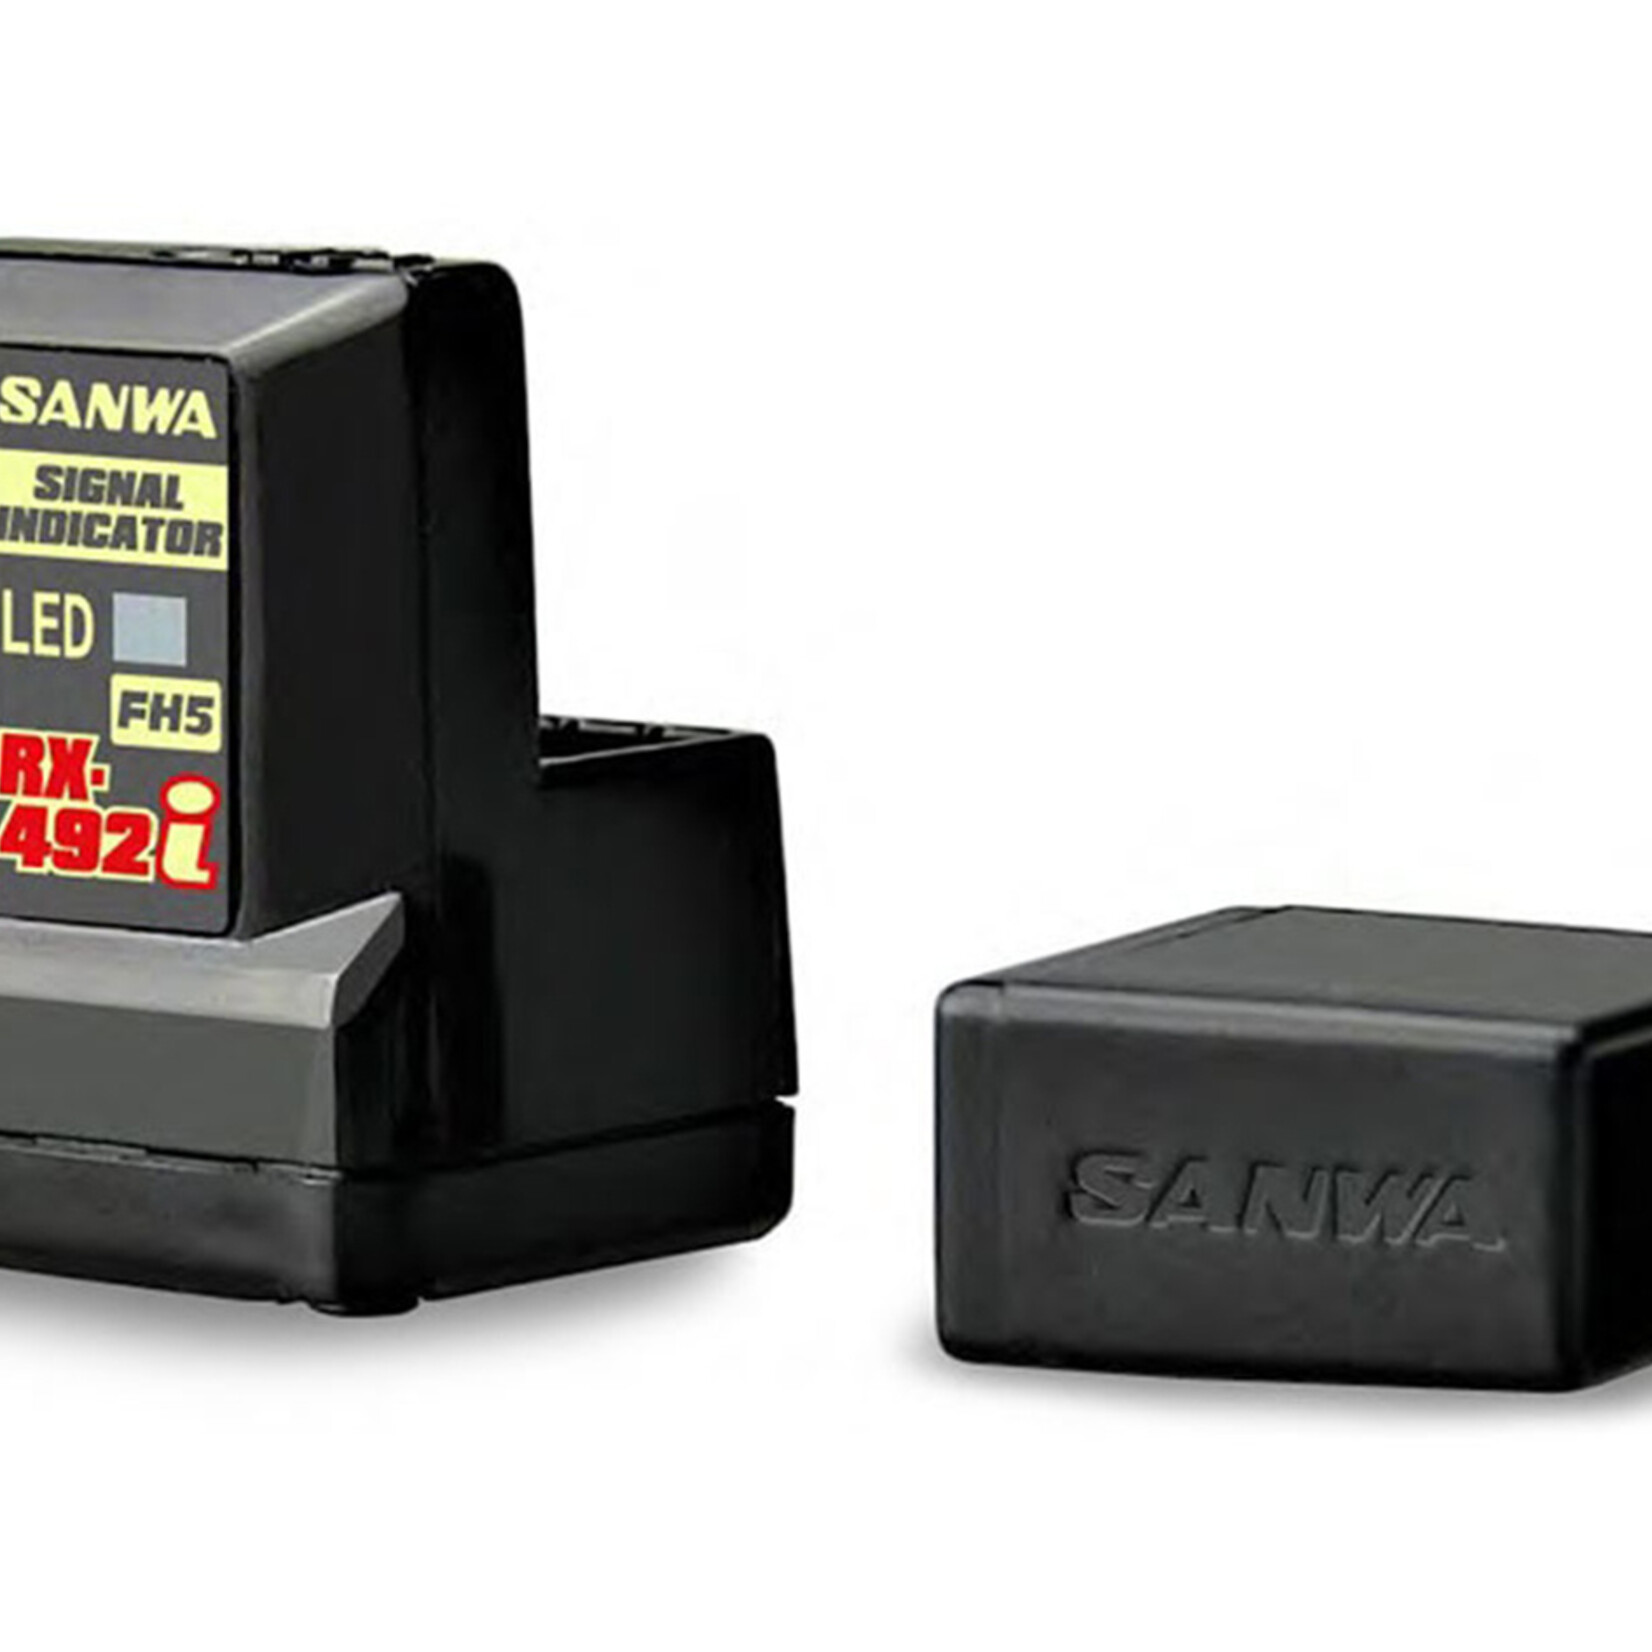 Sanwa Sanwa M17 Radio + RX-493i + RX-492i Receiver & Preinstalled Battery 101A32483A-492